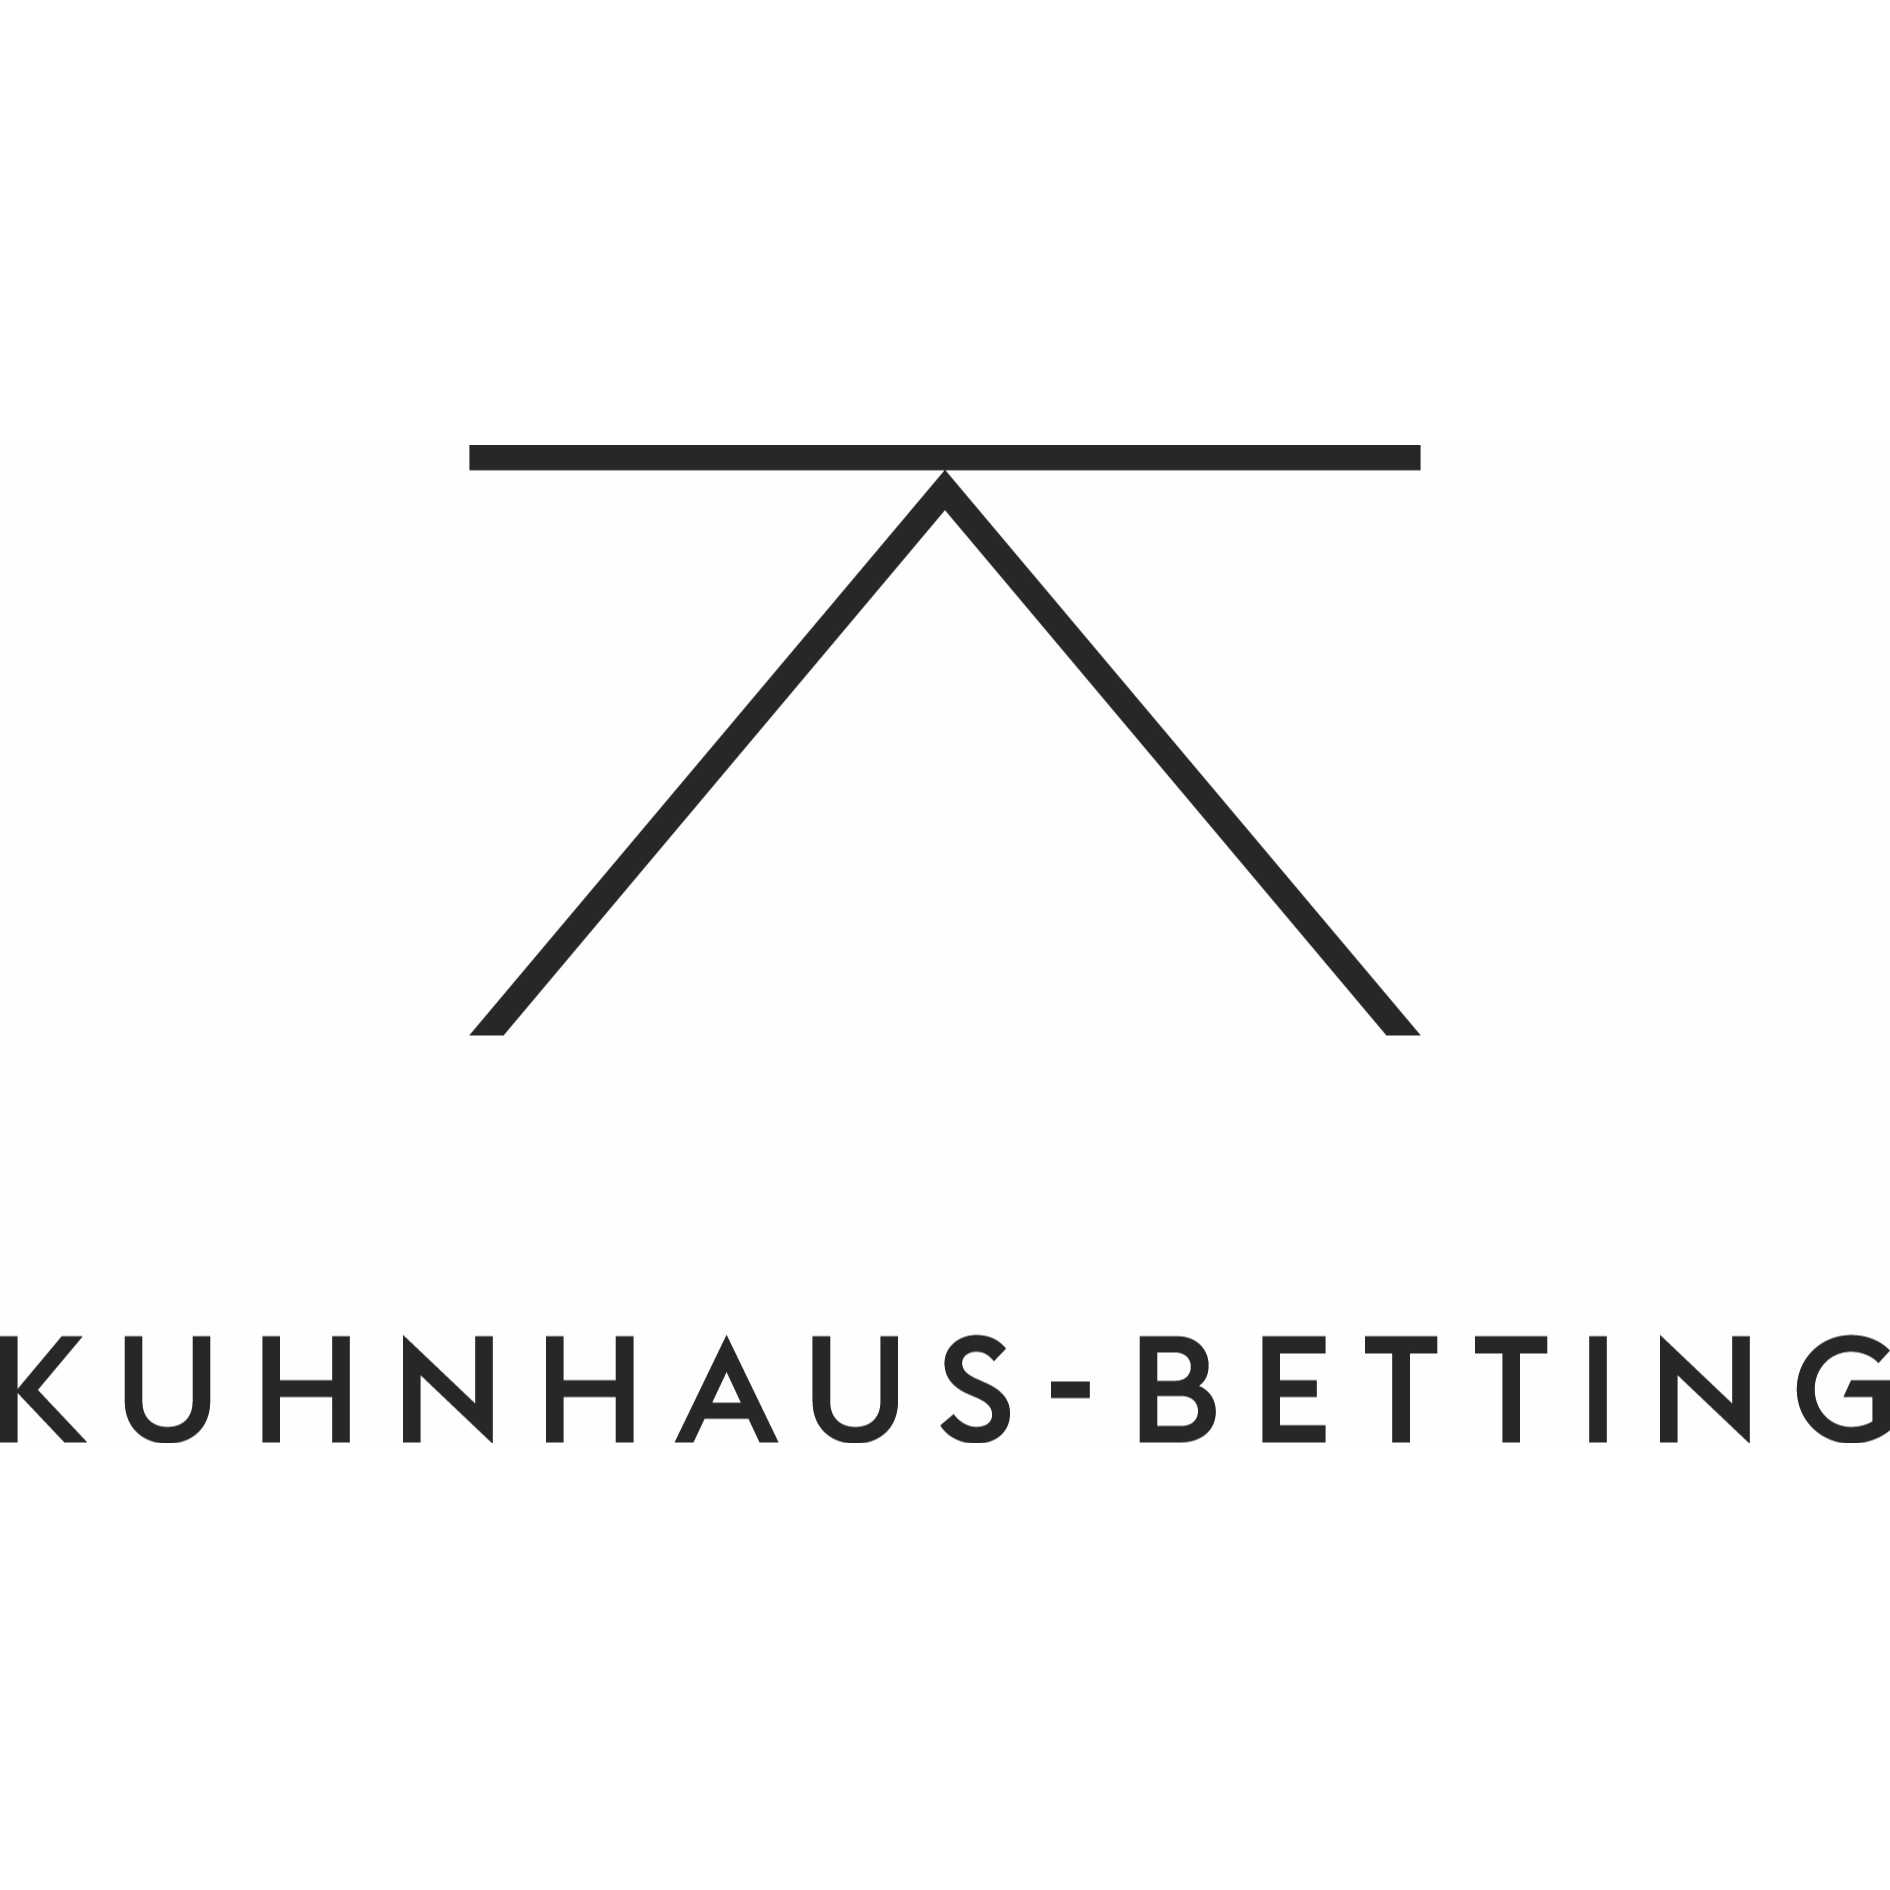 Kuhnhaus-Betting Architekten Logo